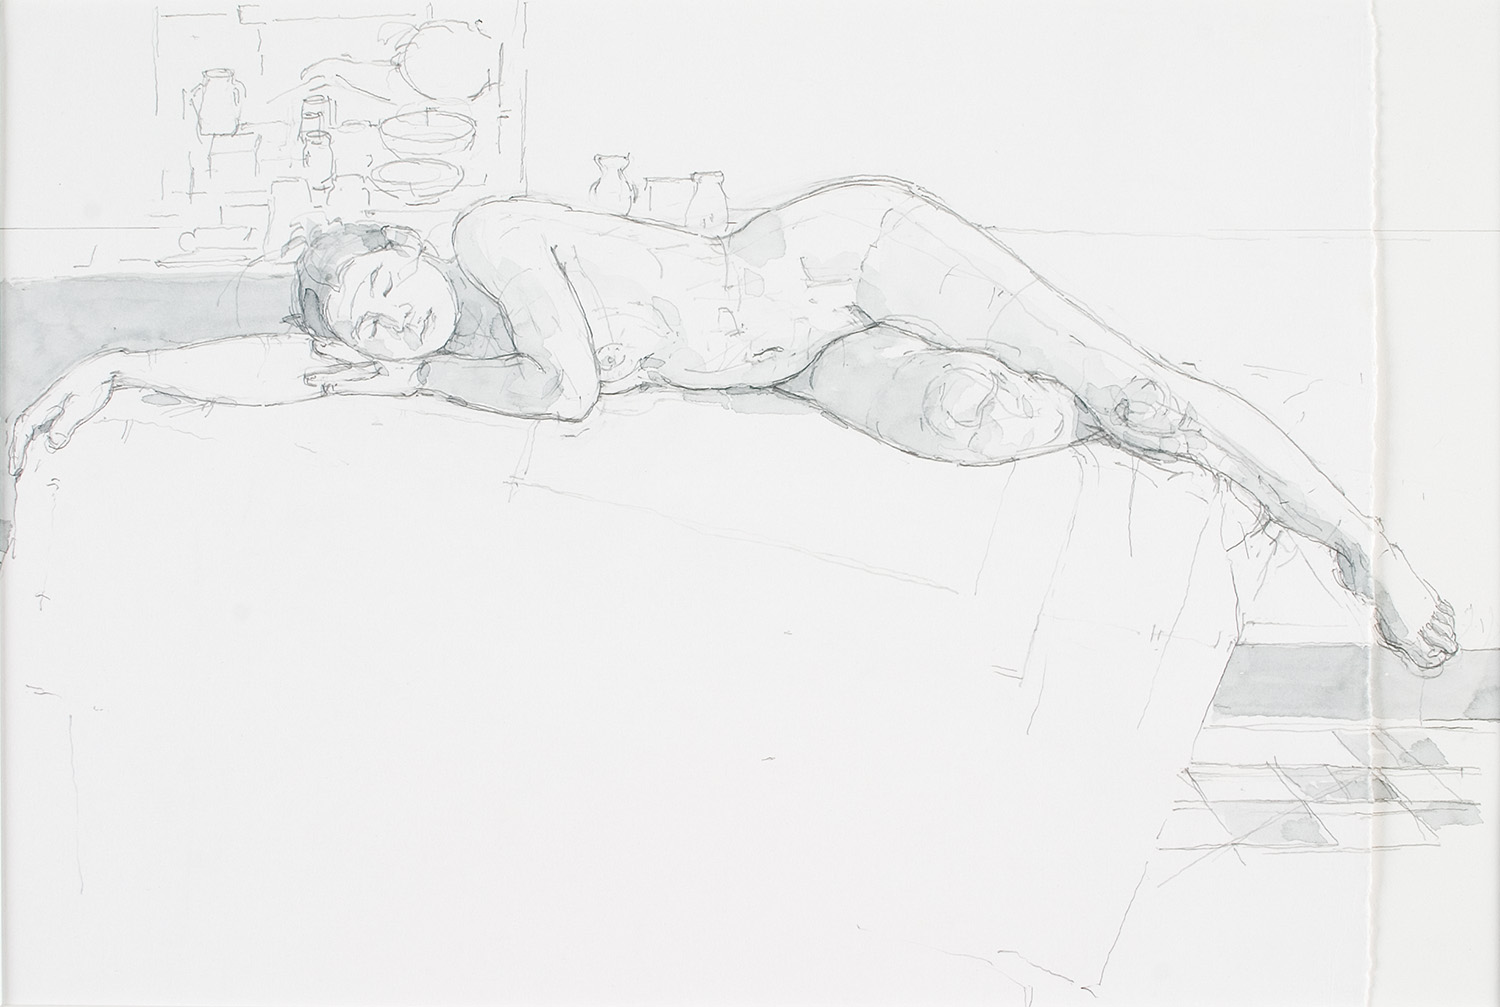 Jolie sleeping by Frederick Ortner (larger)